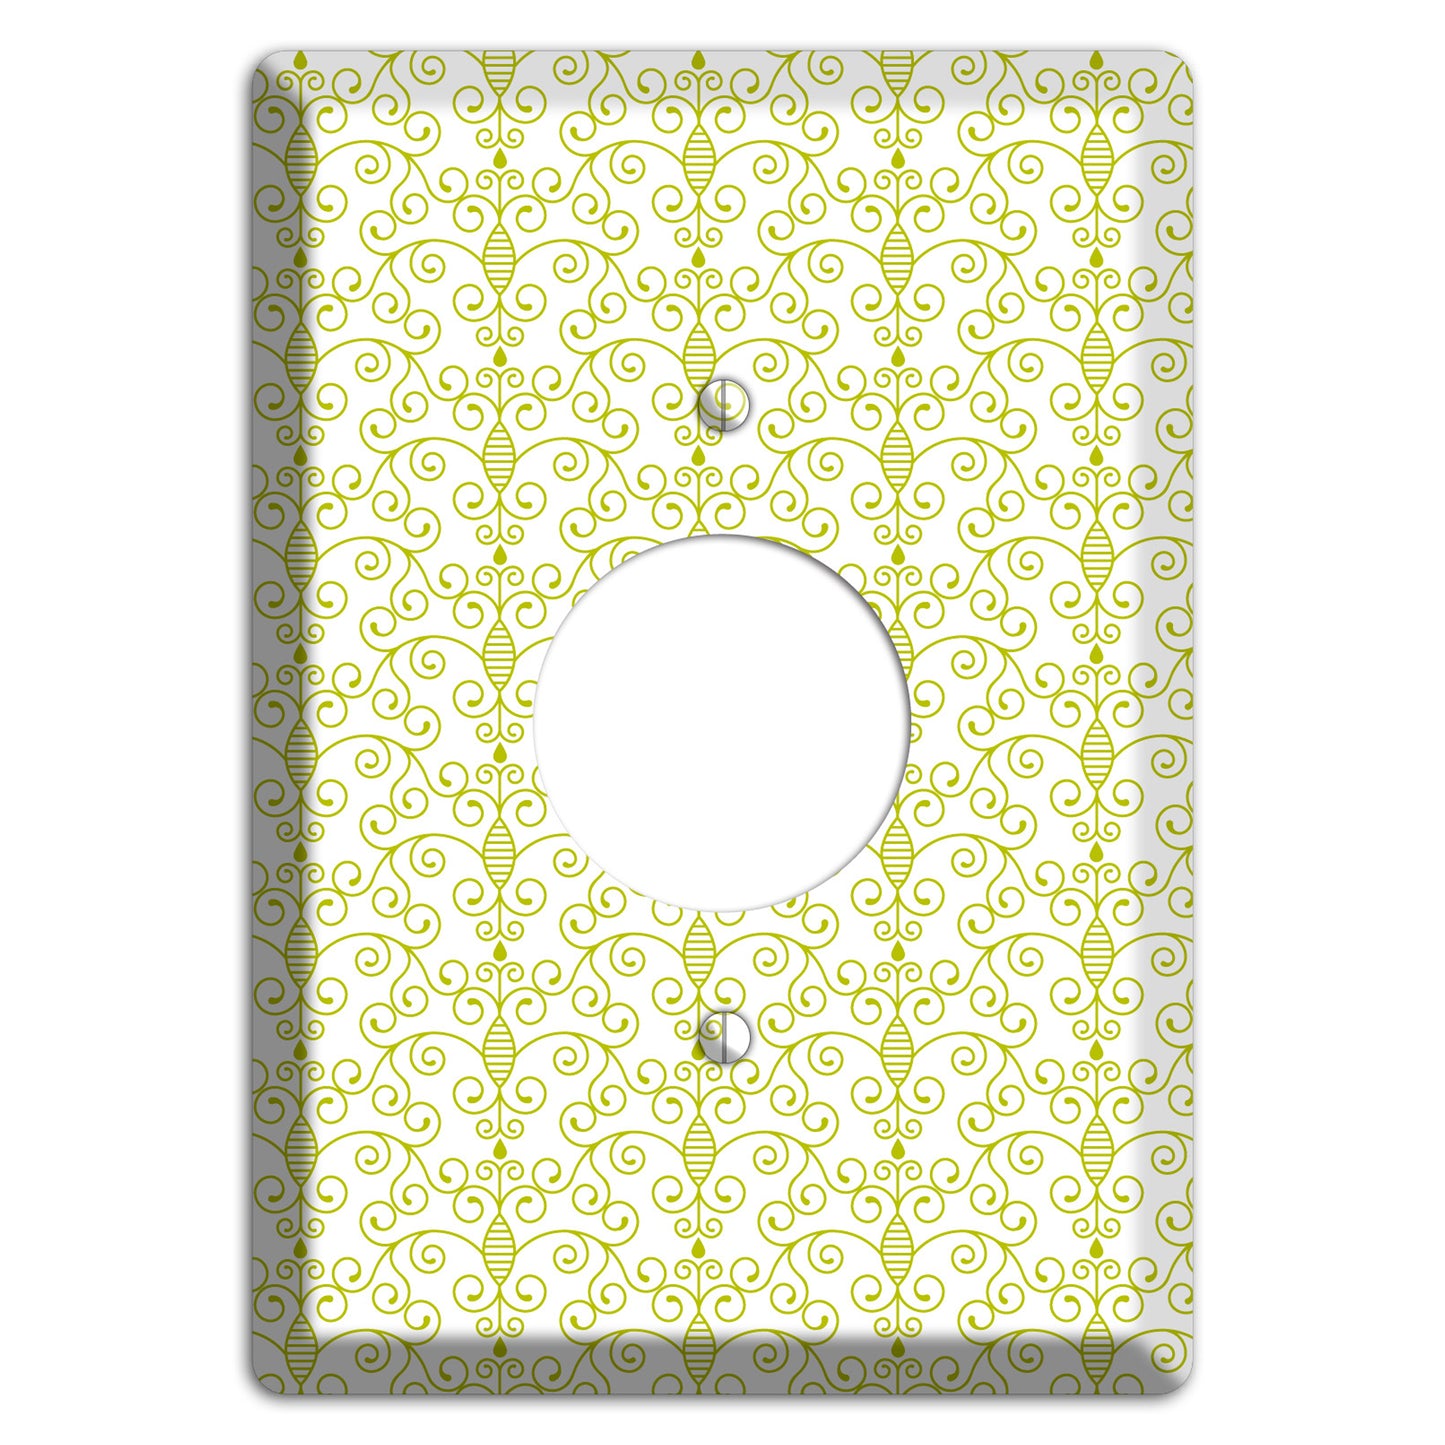 Olive Toile Half Drop Single Receptacle Wallplate